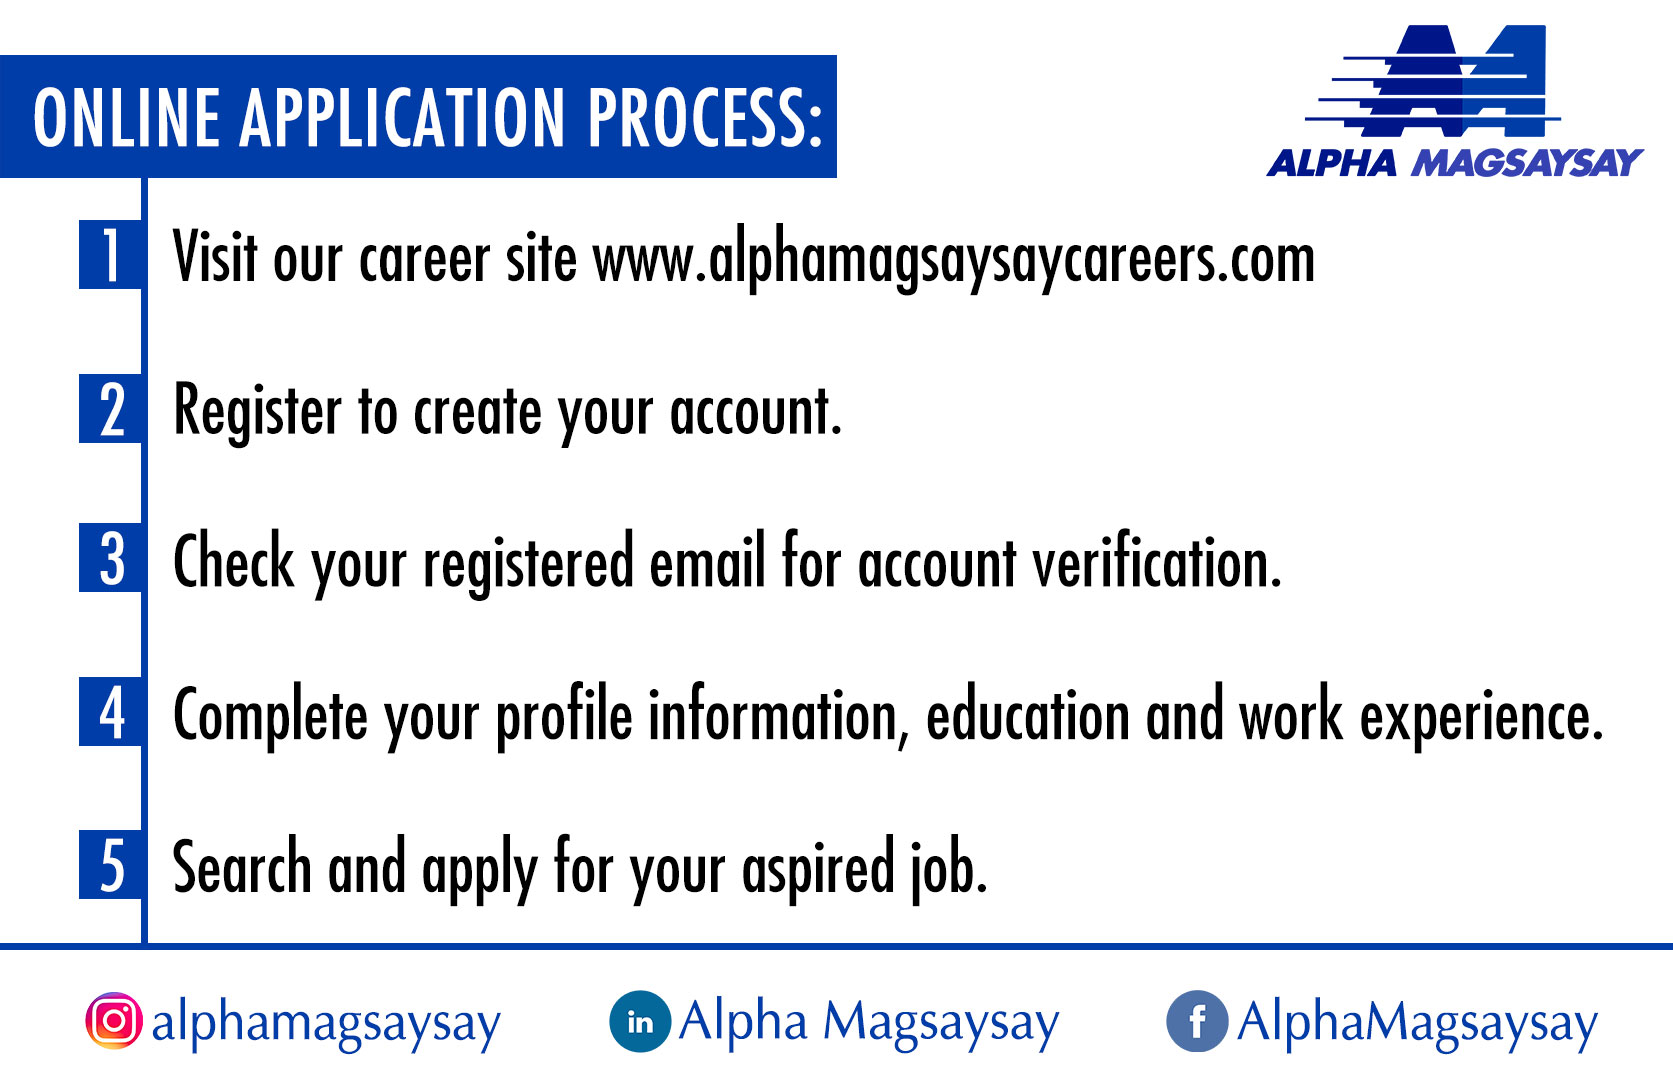 magsaysay philippines job opportunities job